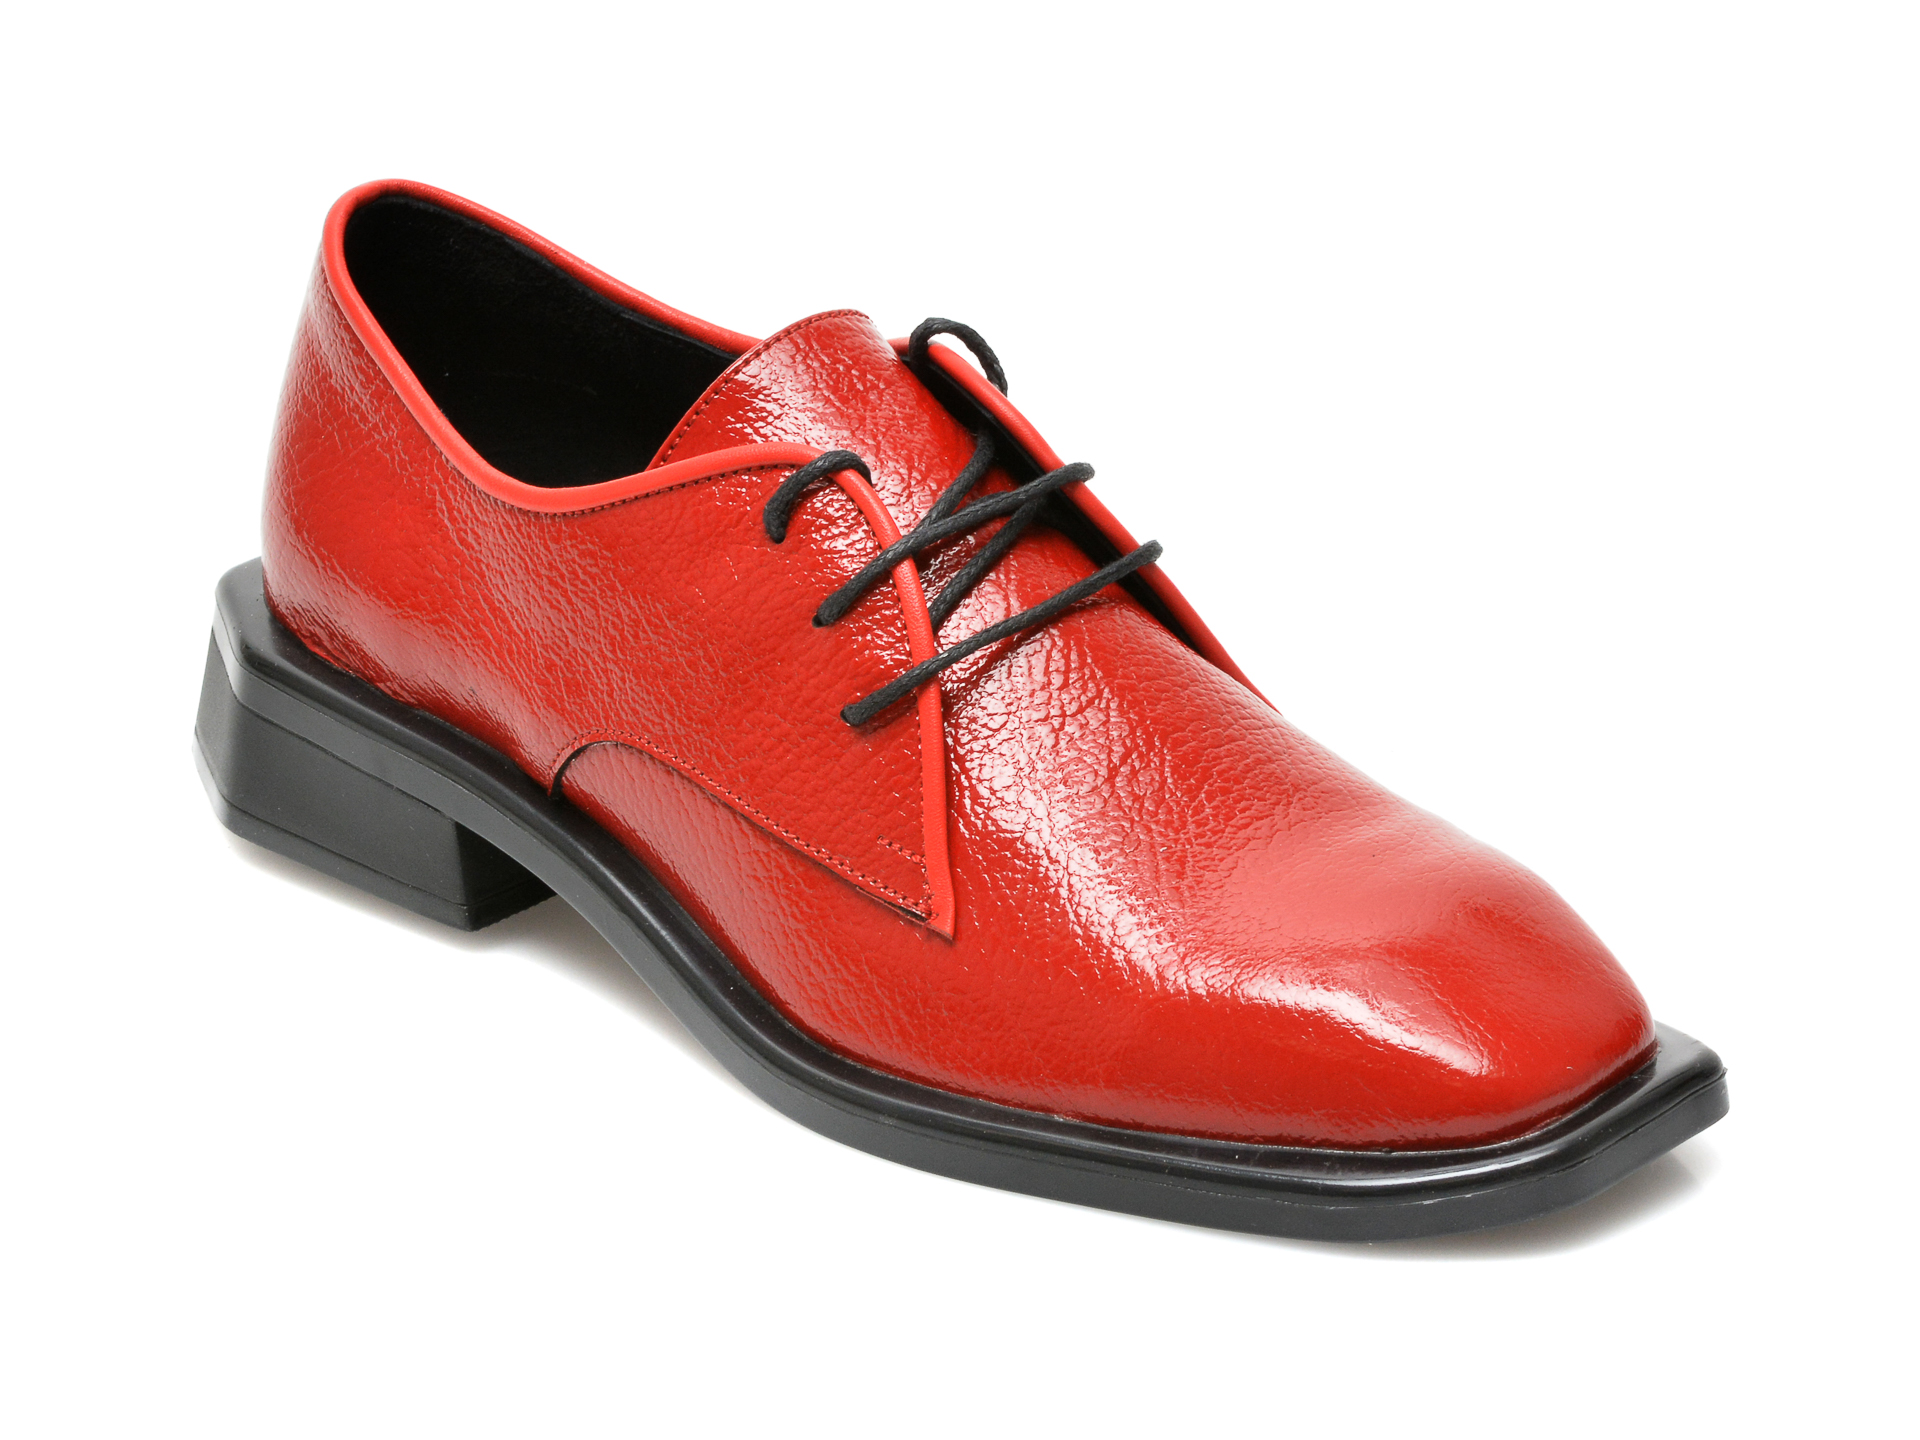 Pantofi MOLLY BESSA rosii, 1307, din piele naturala lacuita Molly Bessa